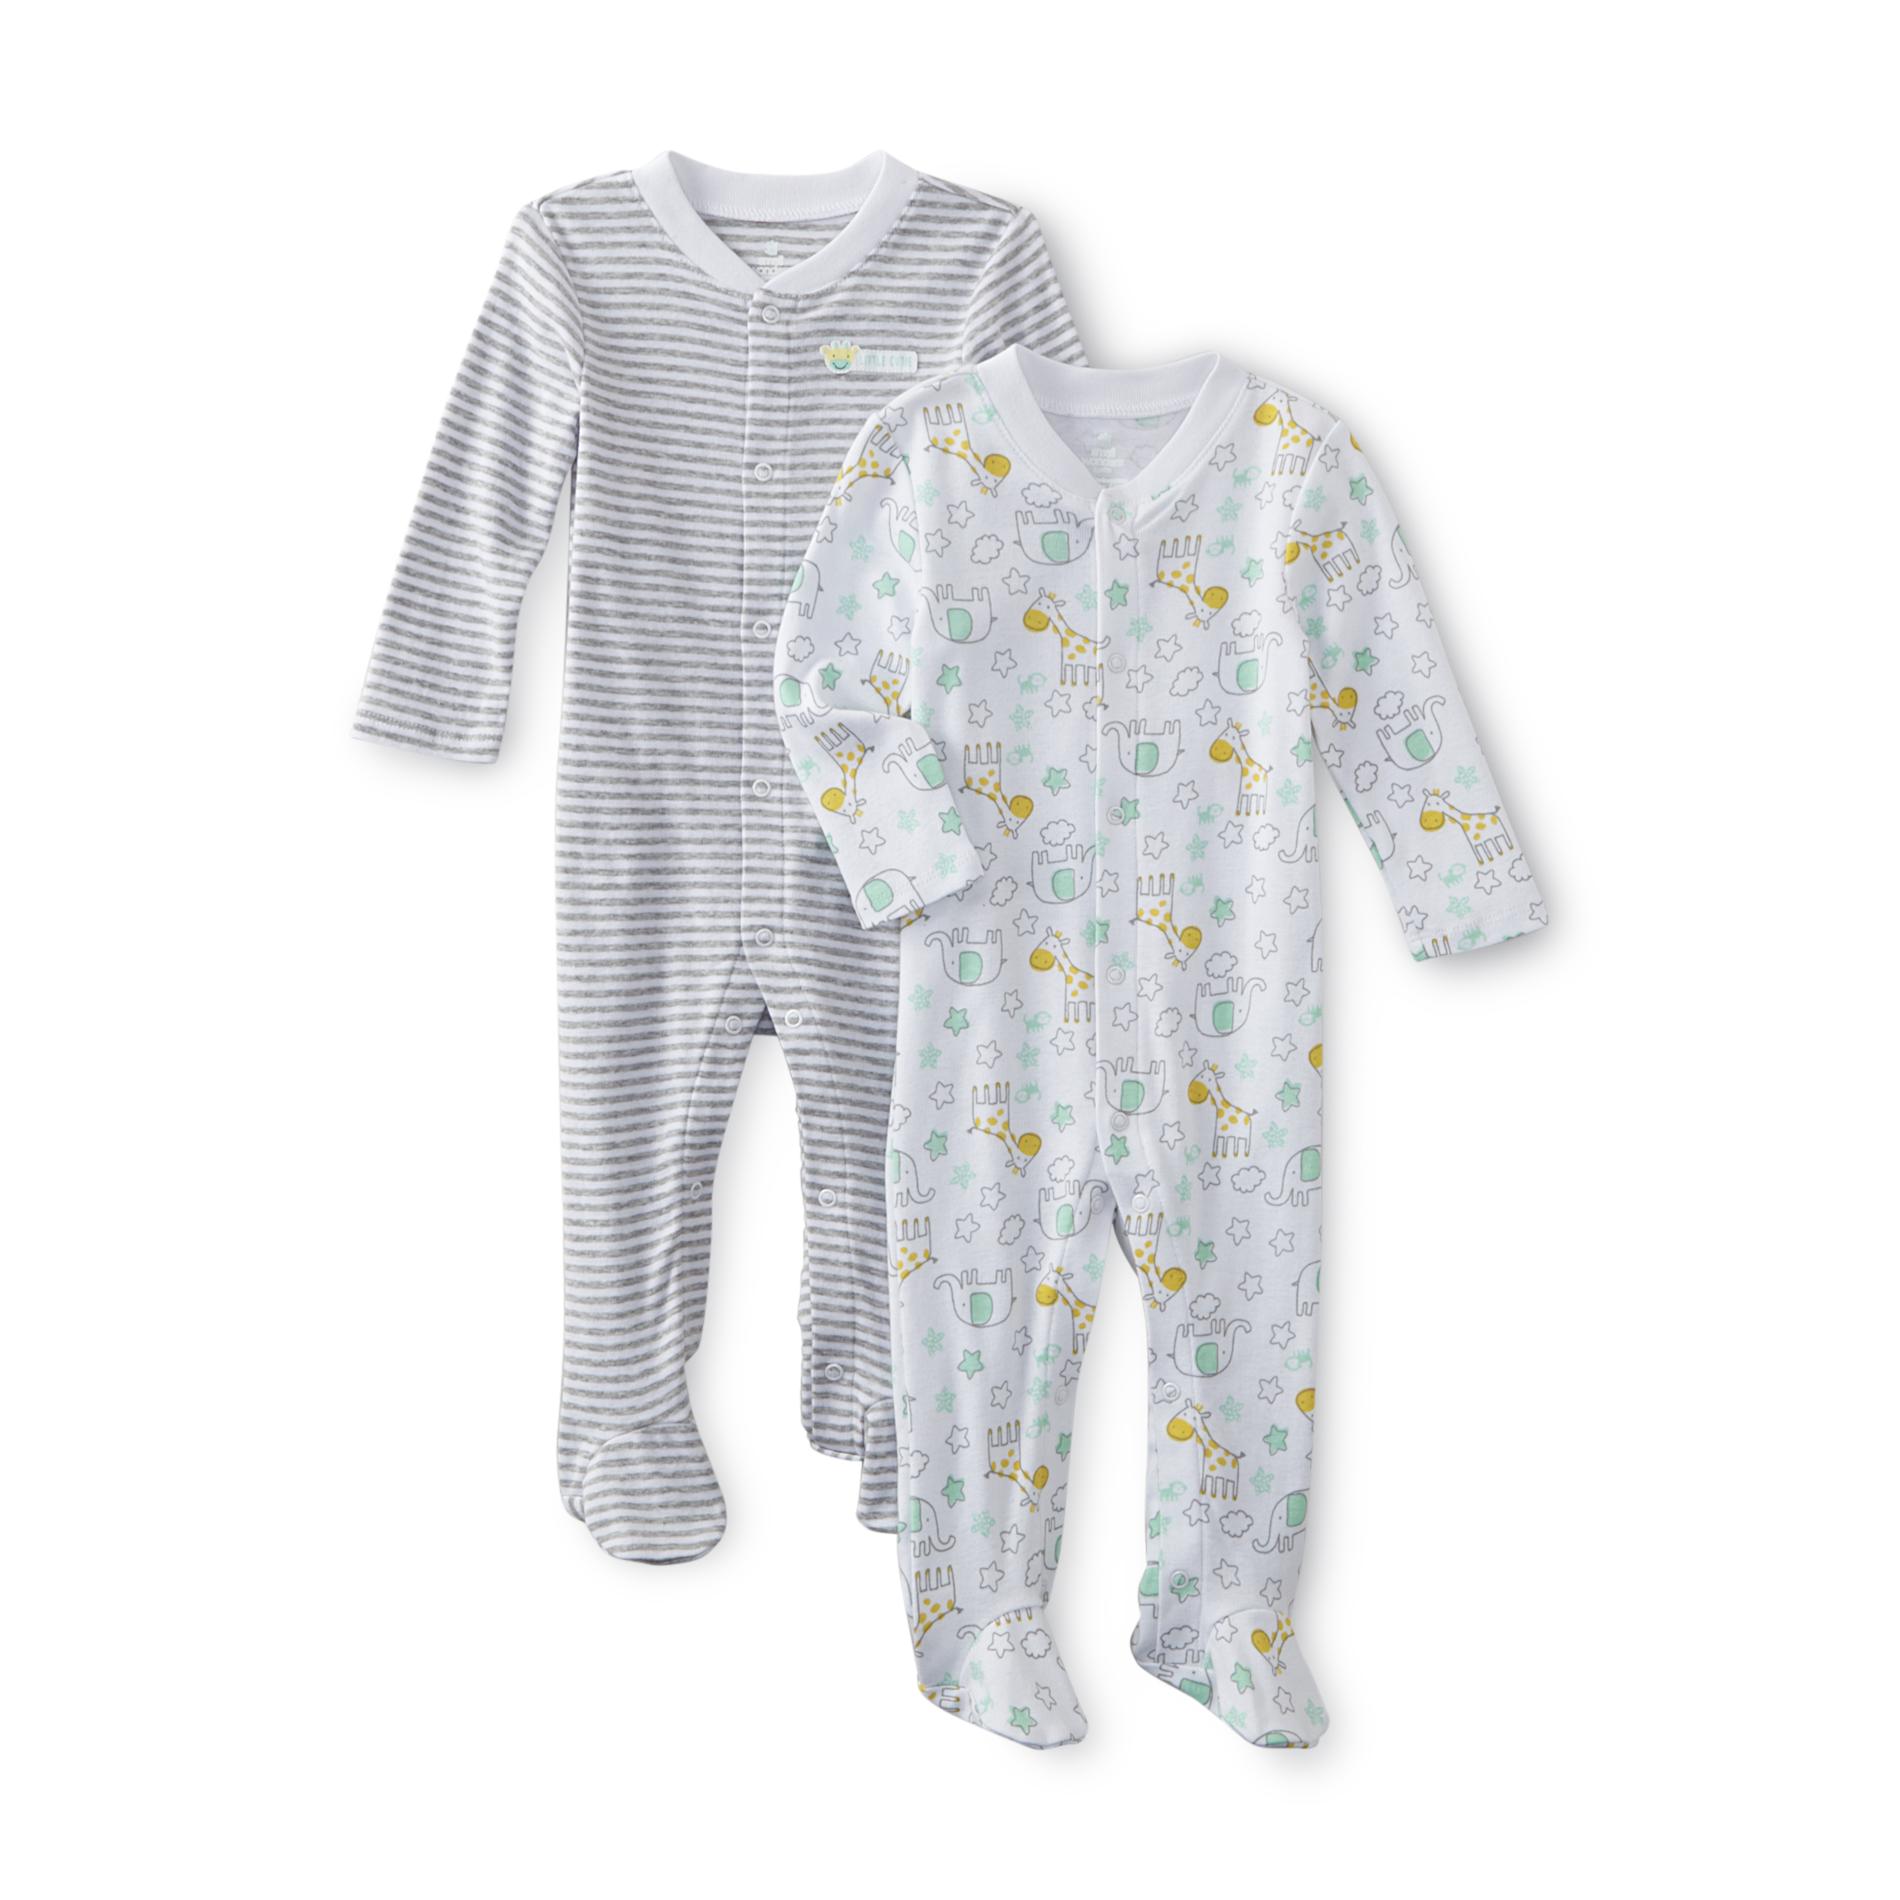 Small Wonders Newborn's 2-Pack Sleeper Pajamas - Striped